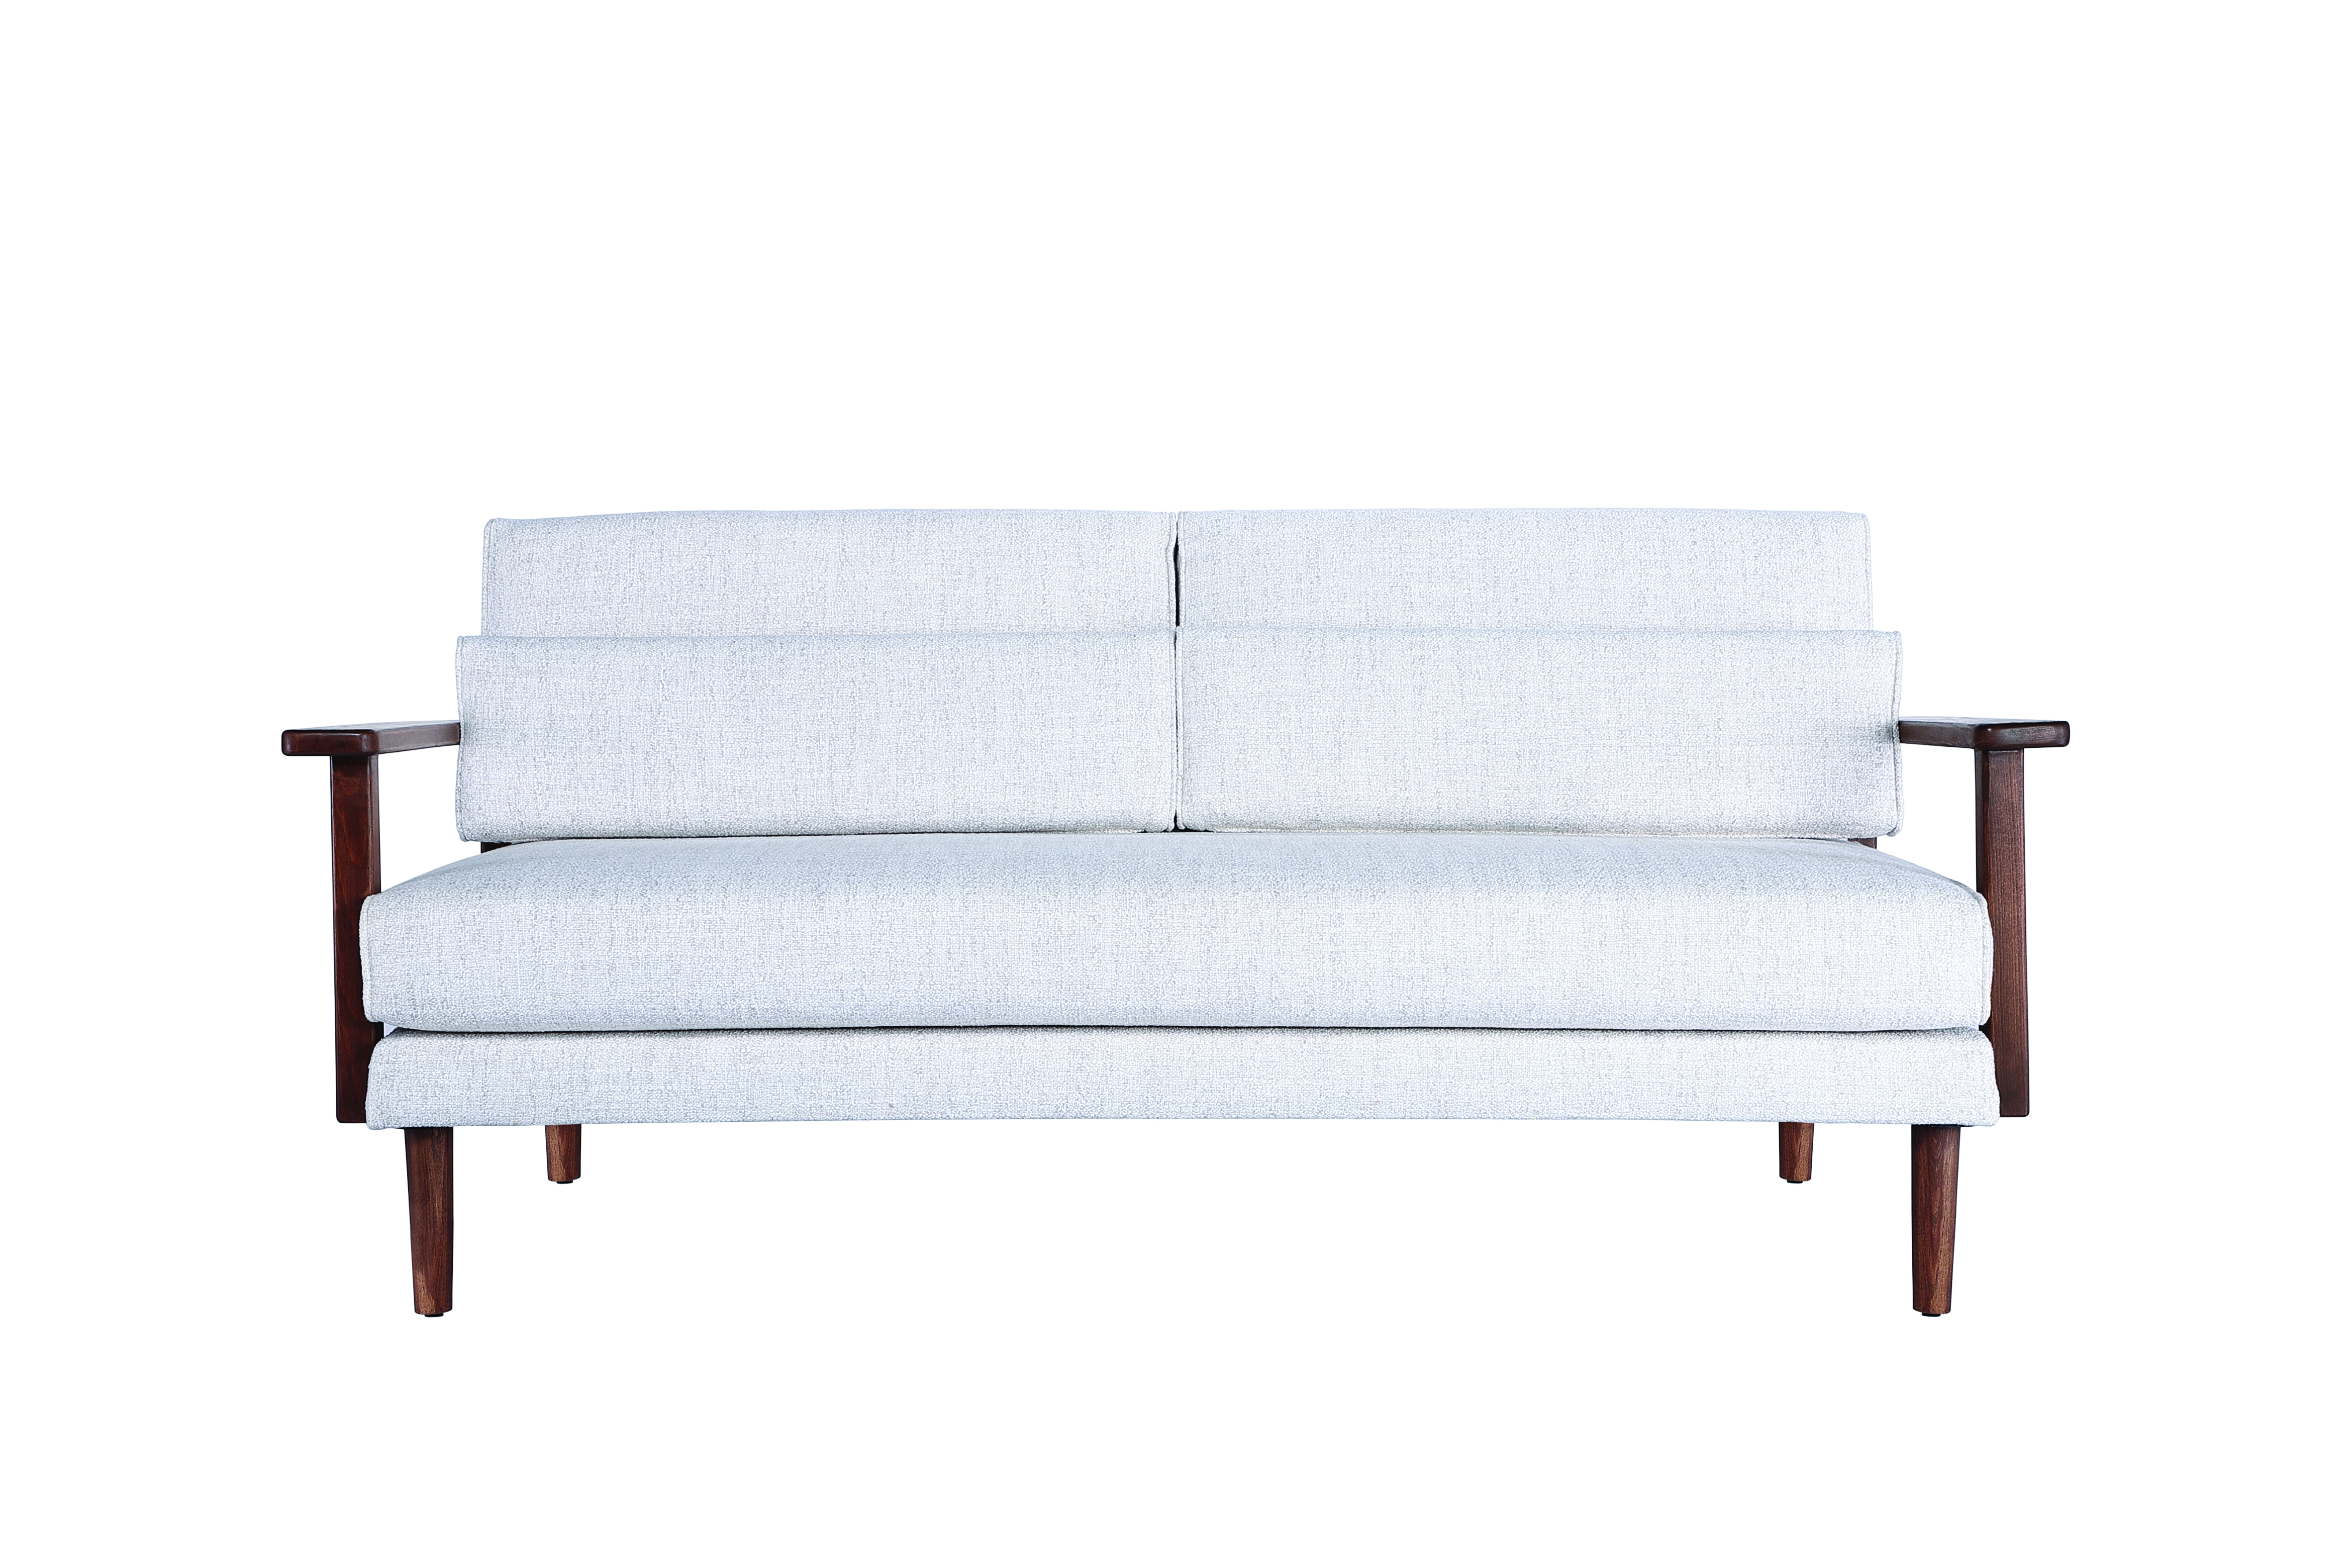 Modern Fabric Upholstered Sofa with Wood Frame, White and Walnut Finish - Image 0